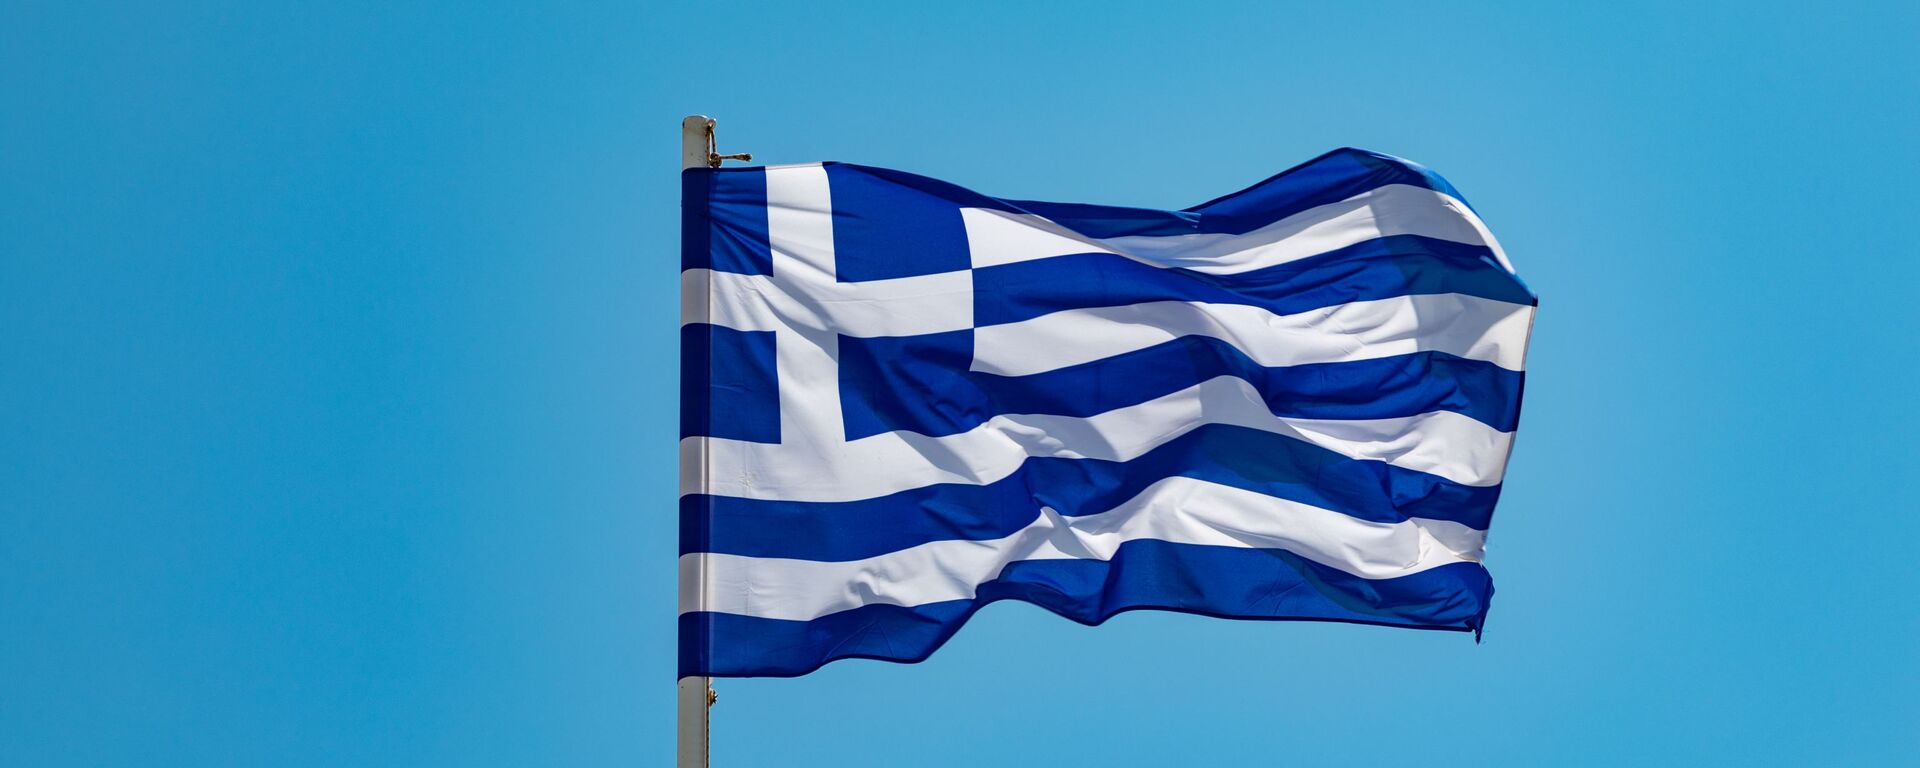 Una bandera de Grecia - Sputnik Mundo, 1920, 26.08.2020